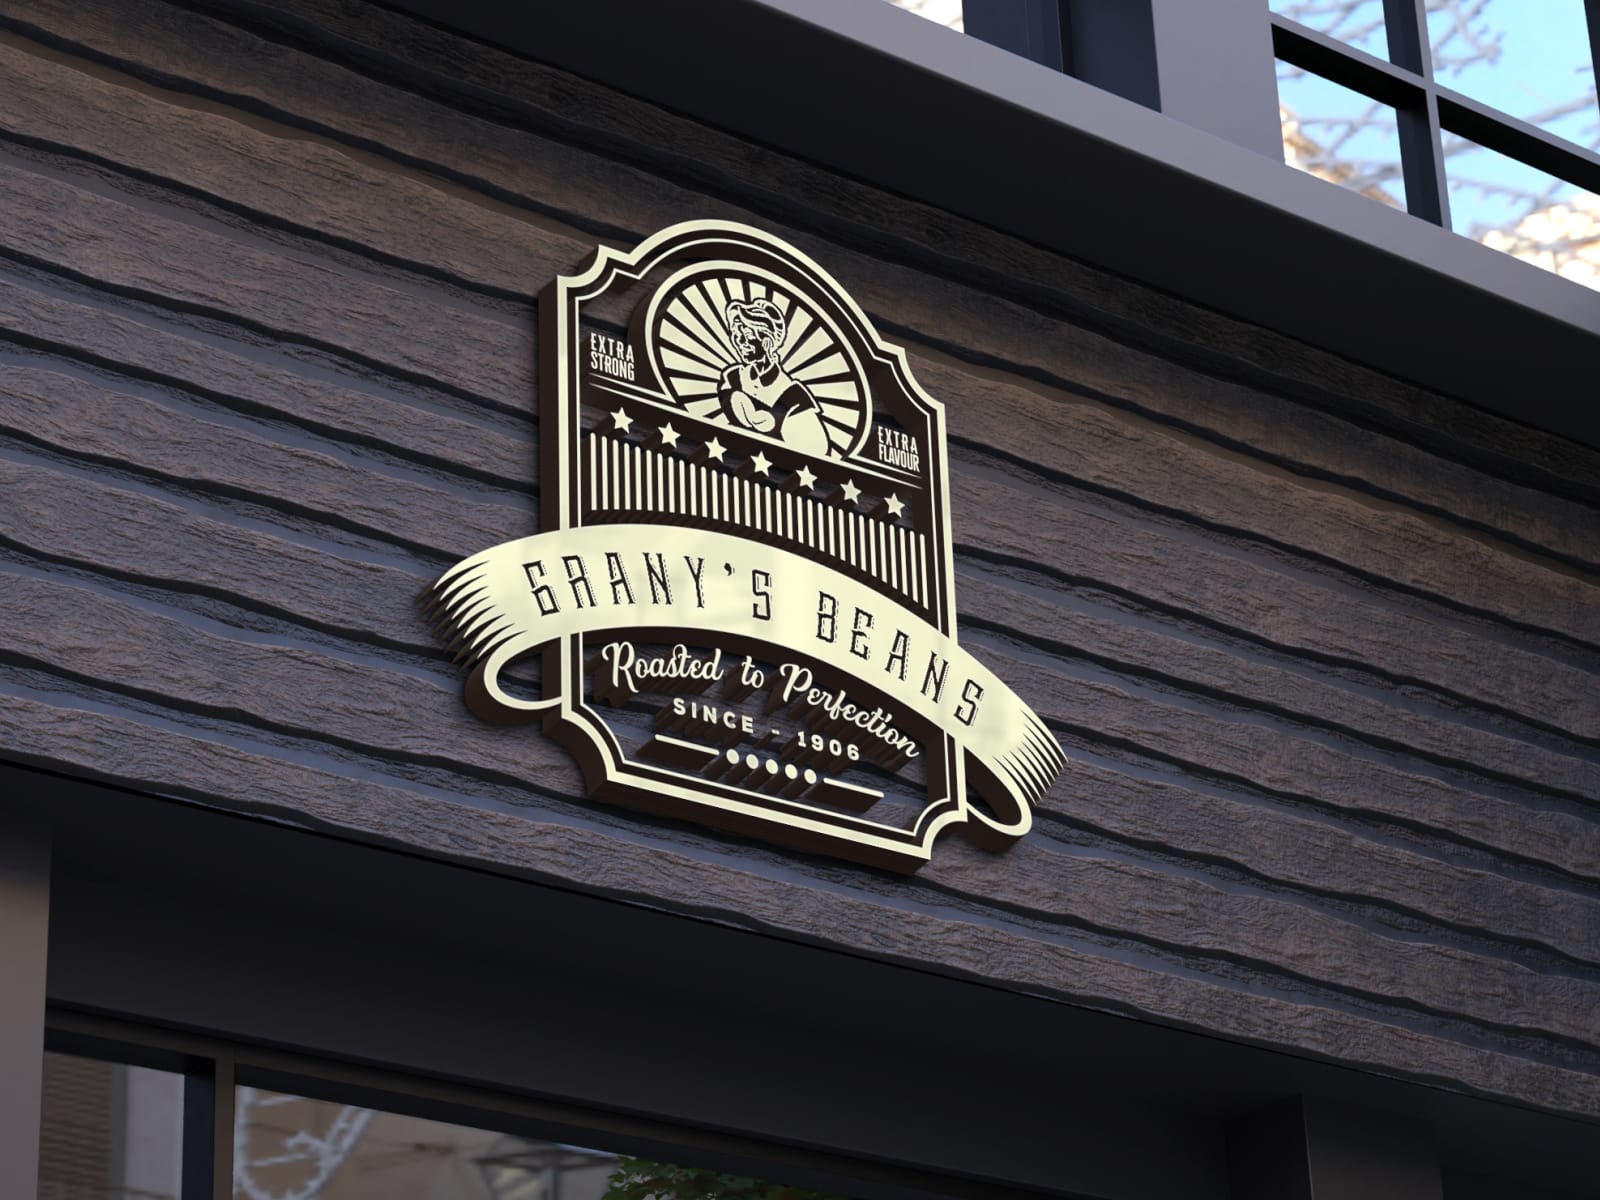 A grany's beans vintage logo